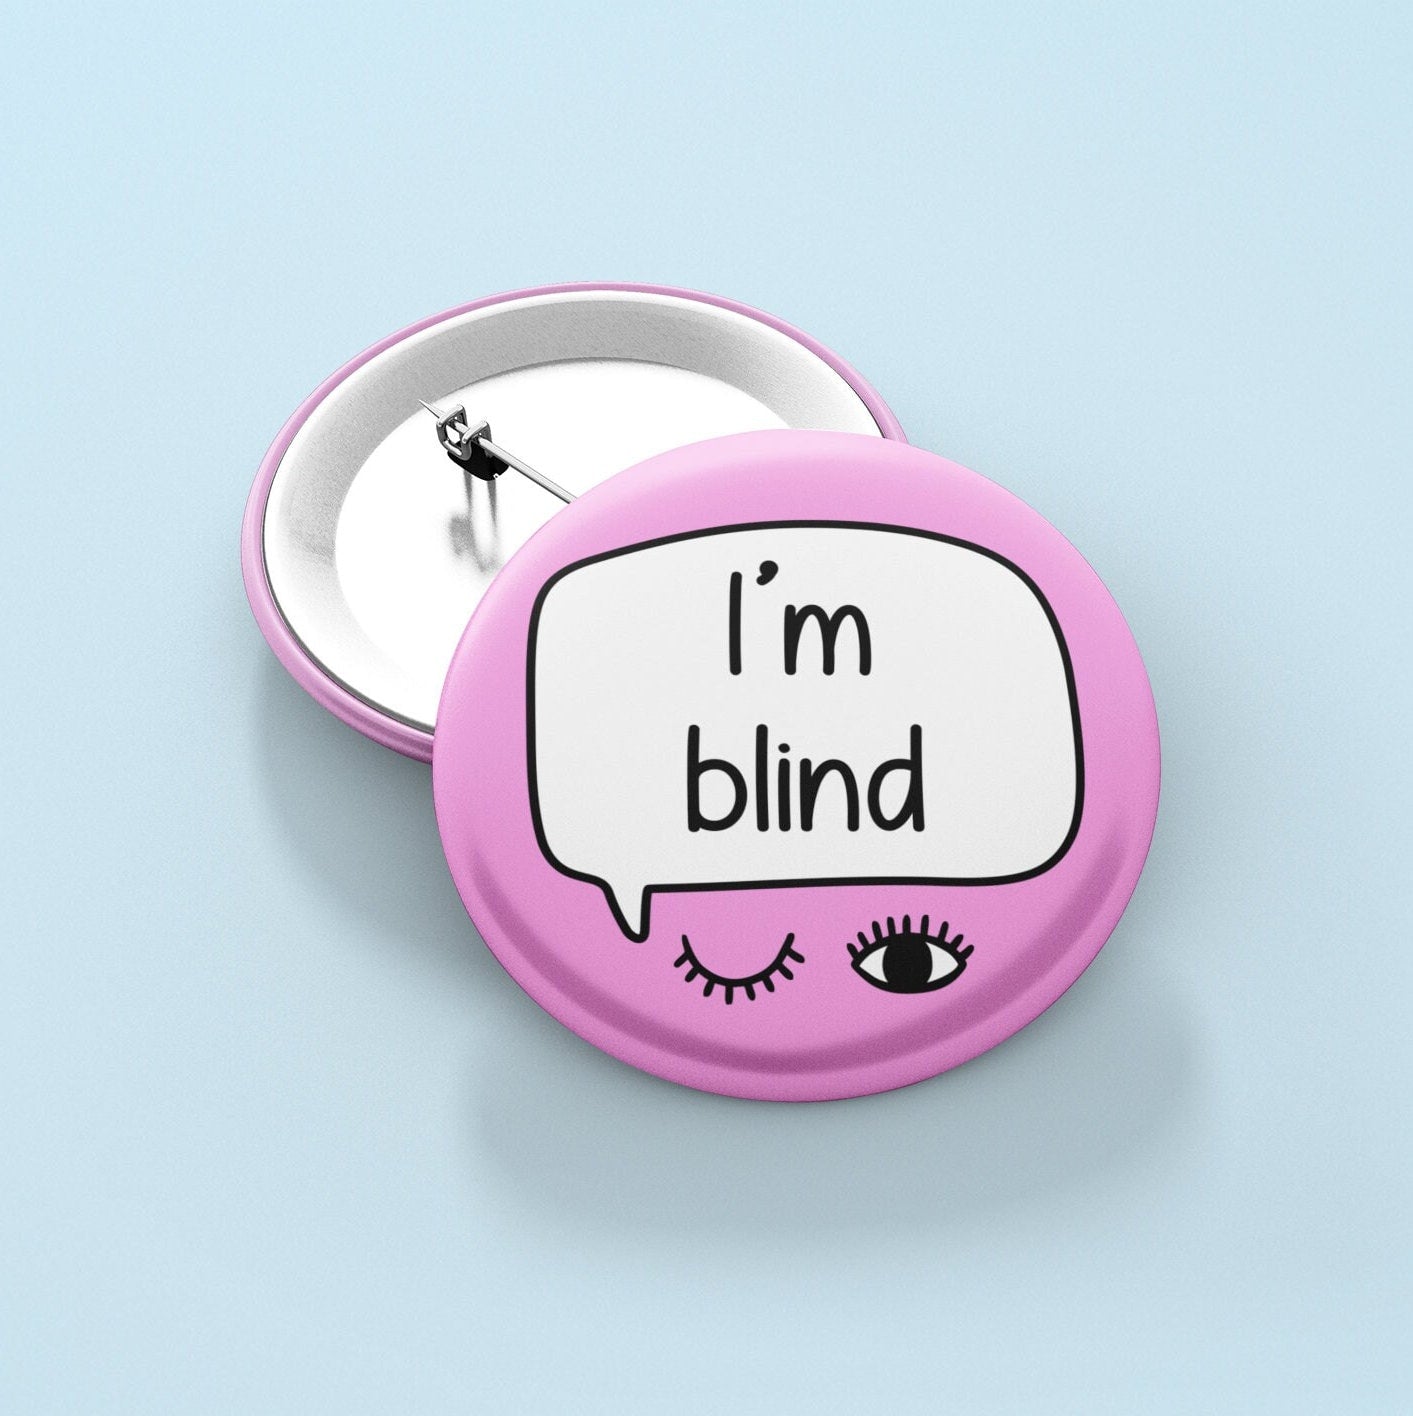 I'm Blind - Badge Pin | Blindness Pins